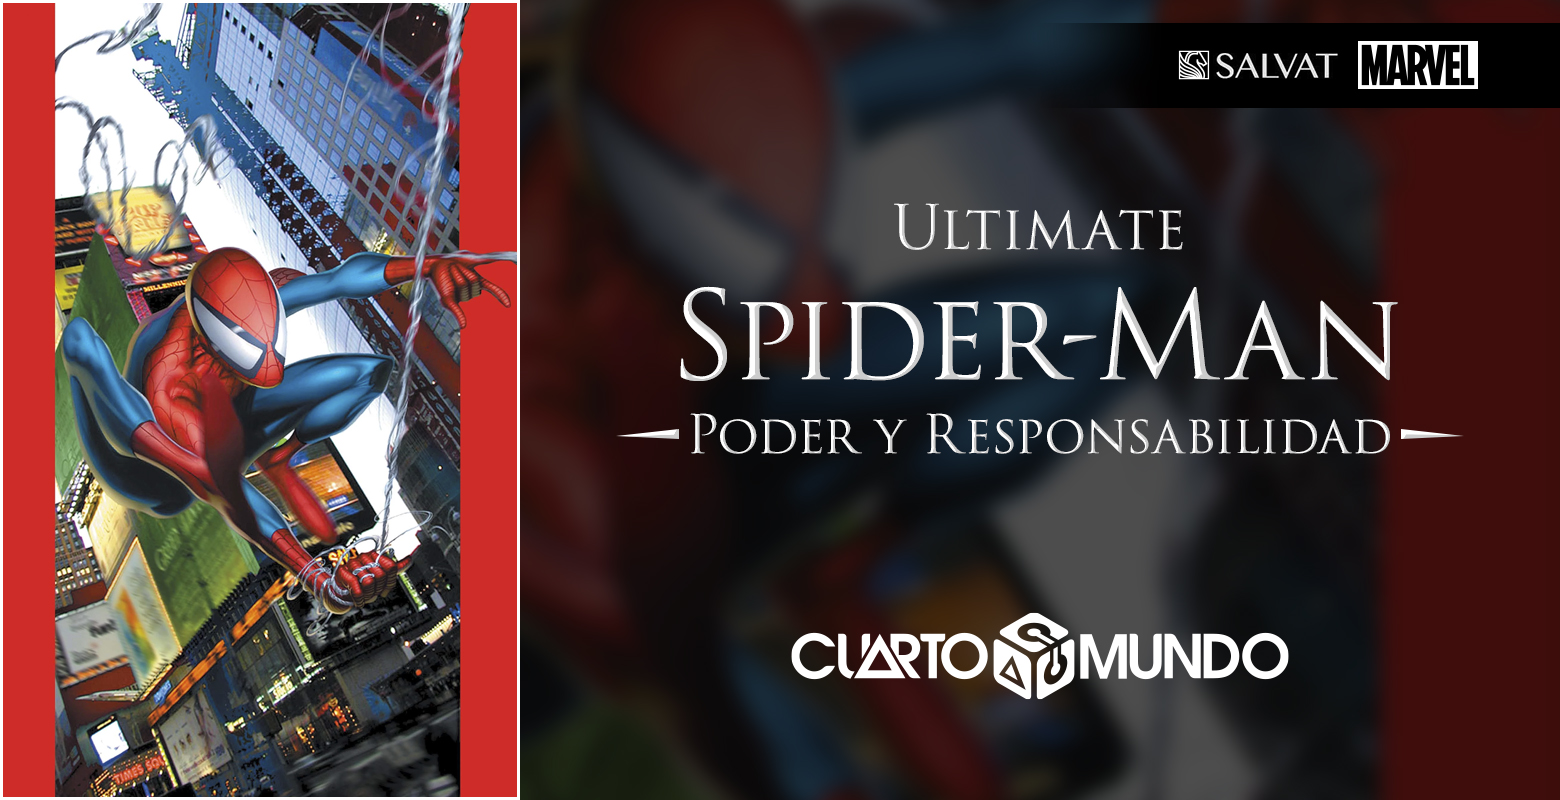 Marvel Salvat - Ultimate Spider-Man: Poder y Responsabilidad • Cuarto Mundo